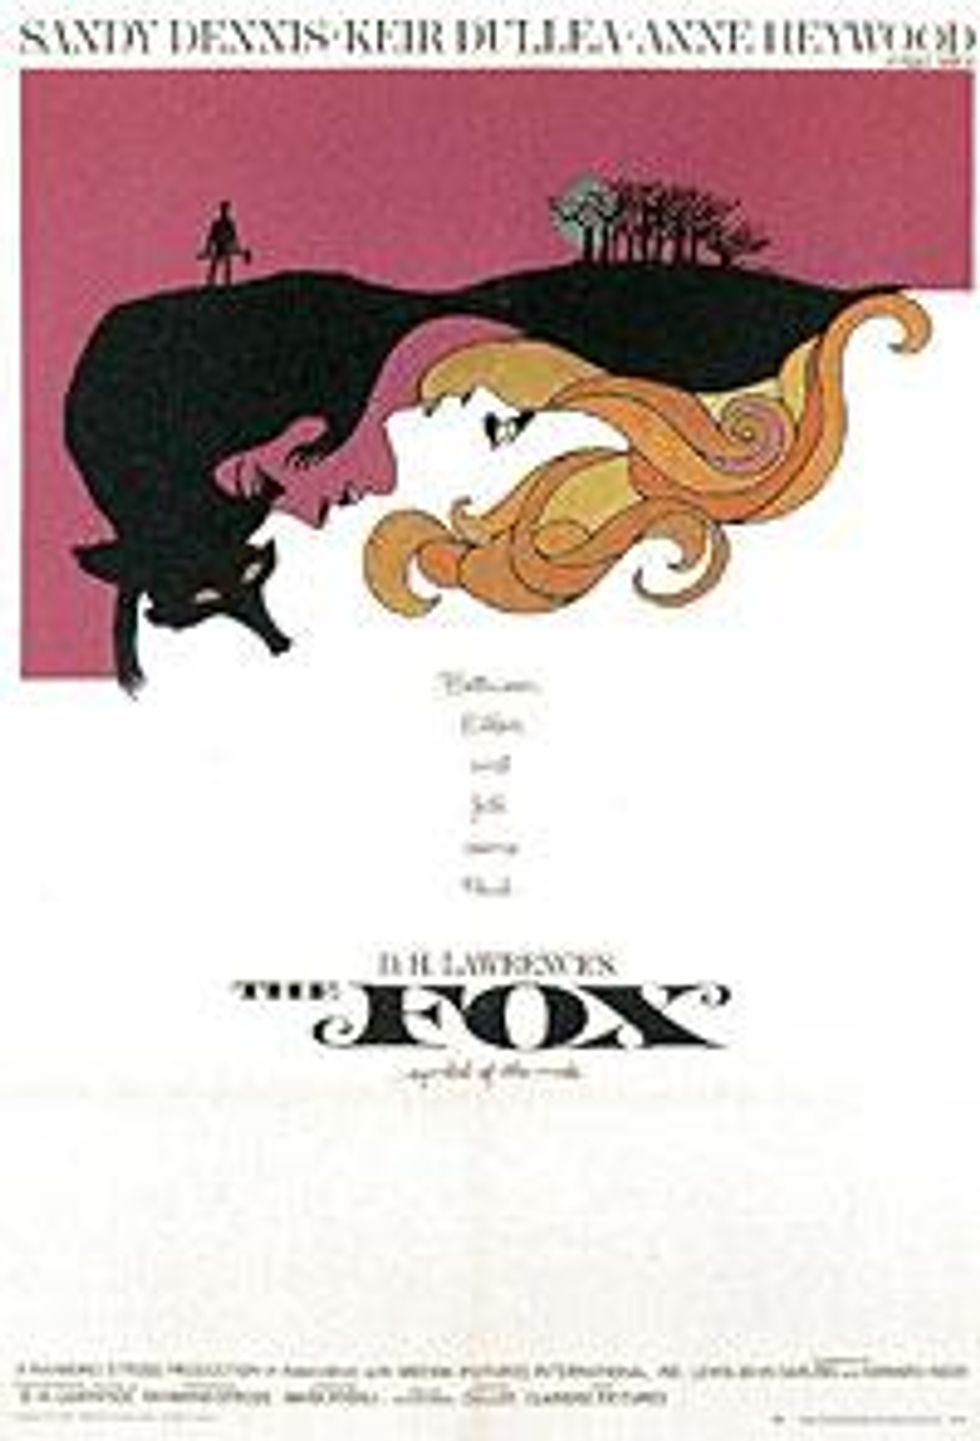 Fox-posterx200_0